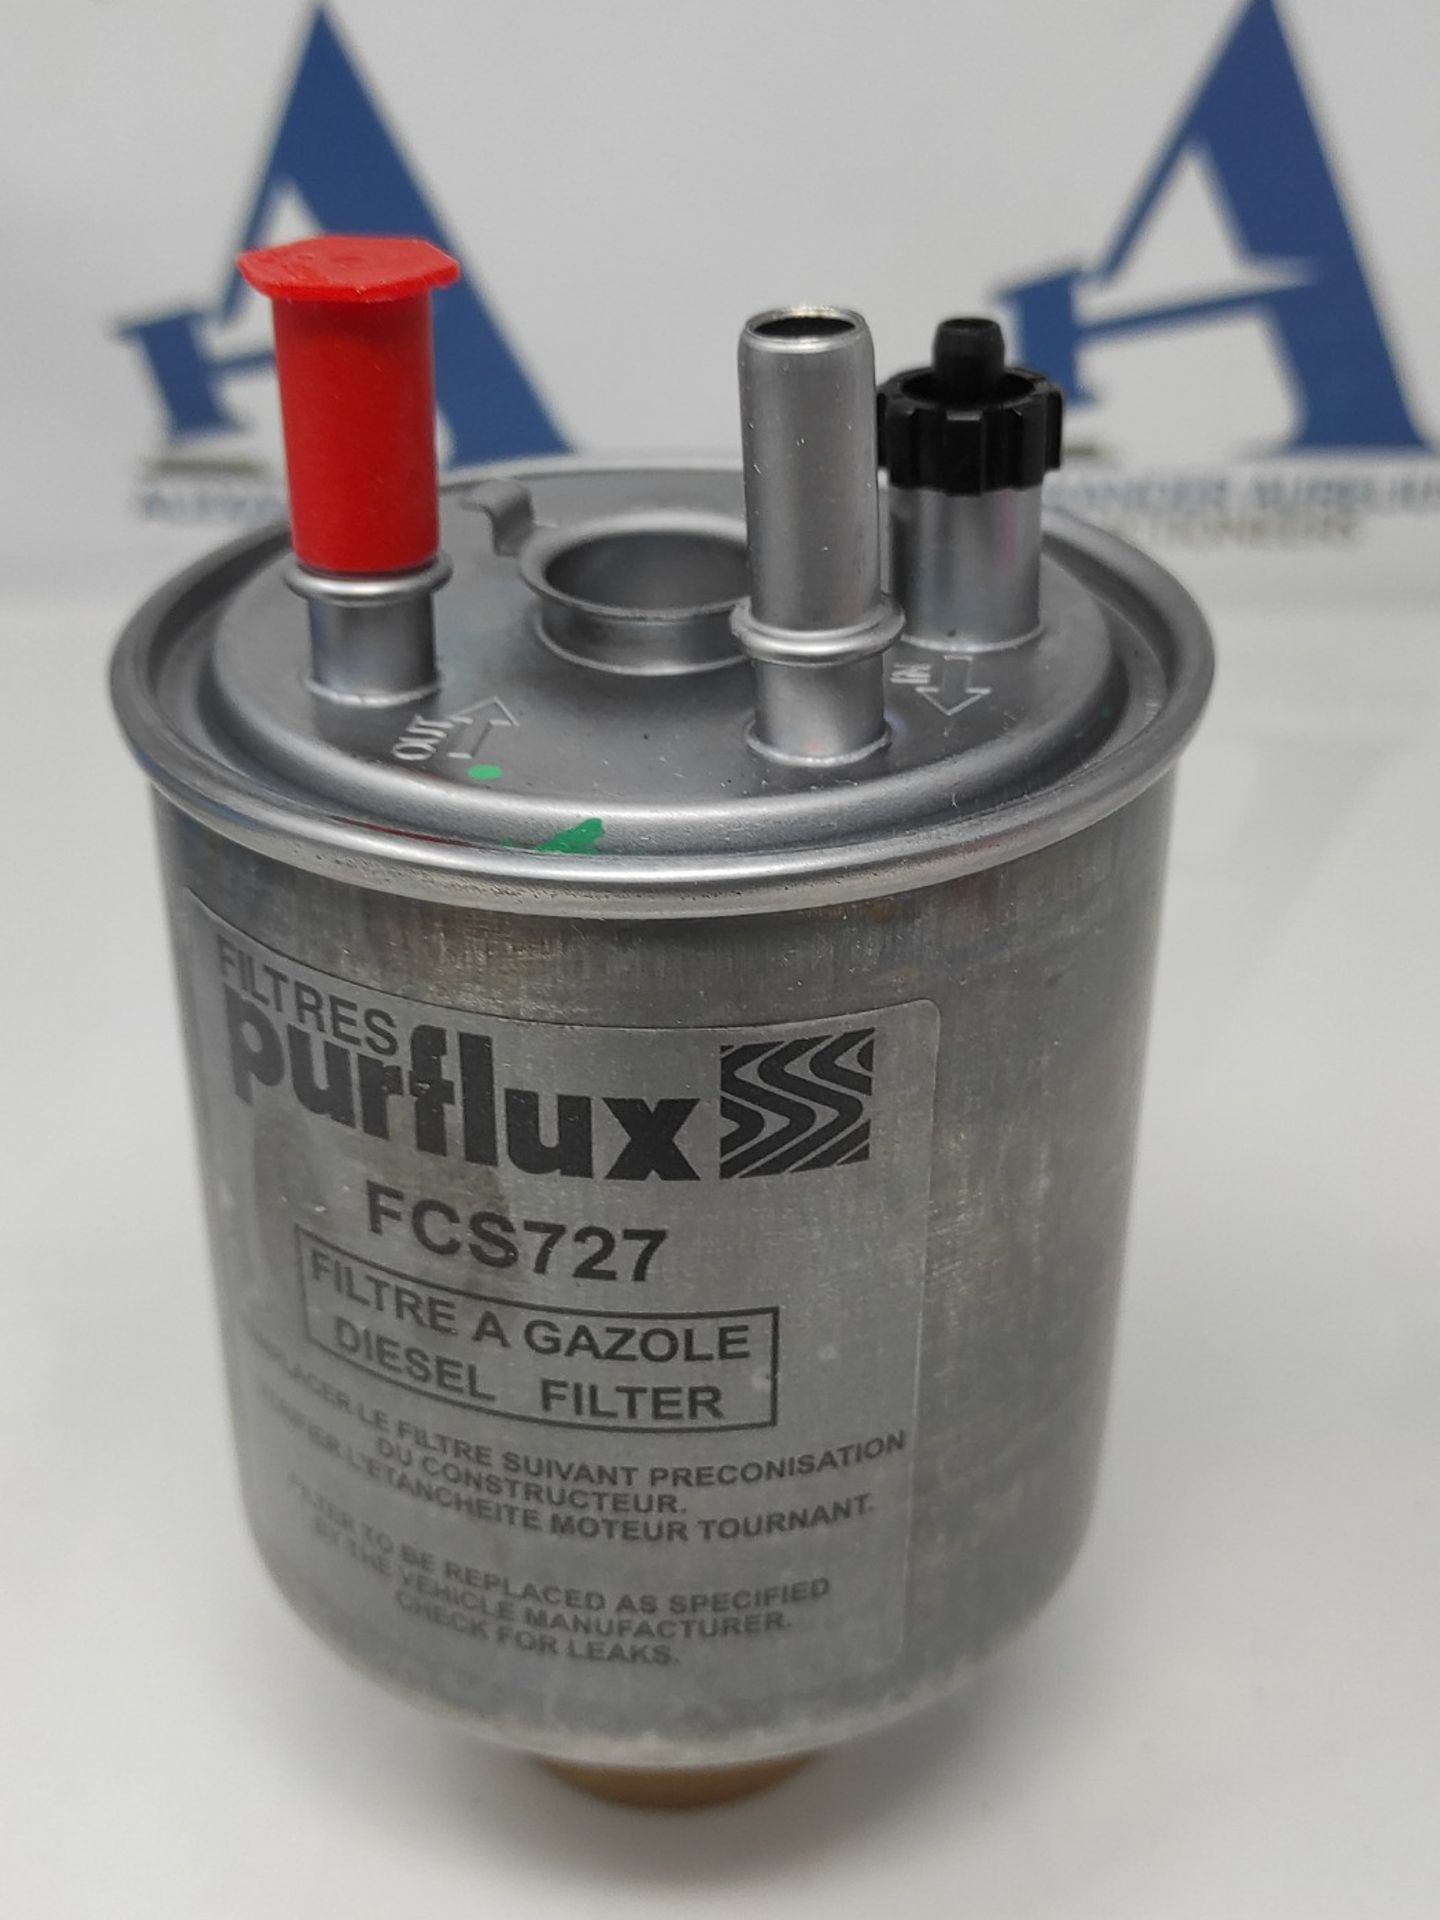 PURFLUX FCS727 Oil filter, quantity 1 - Image 3 of 3